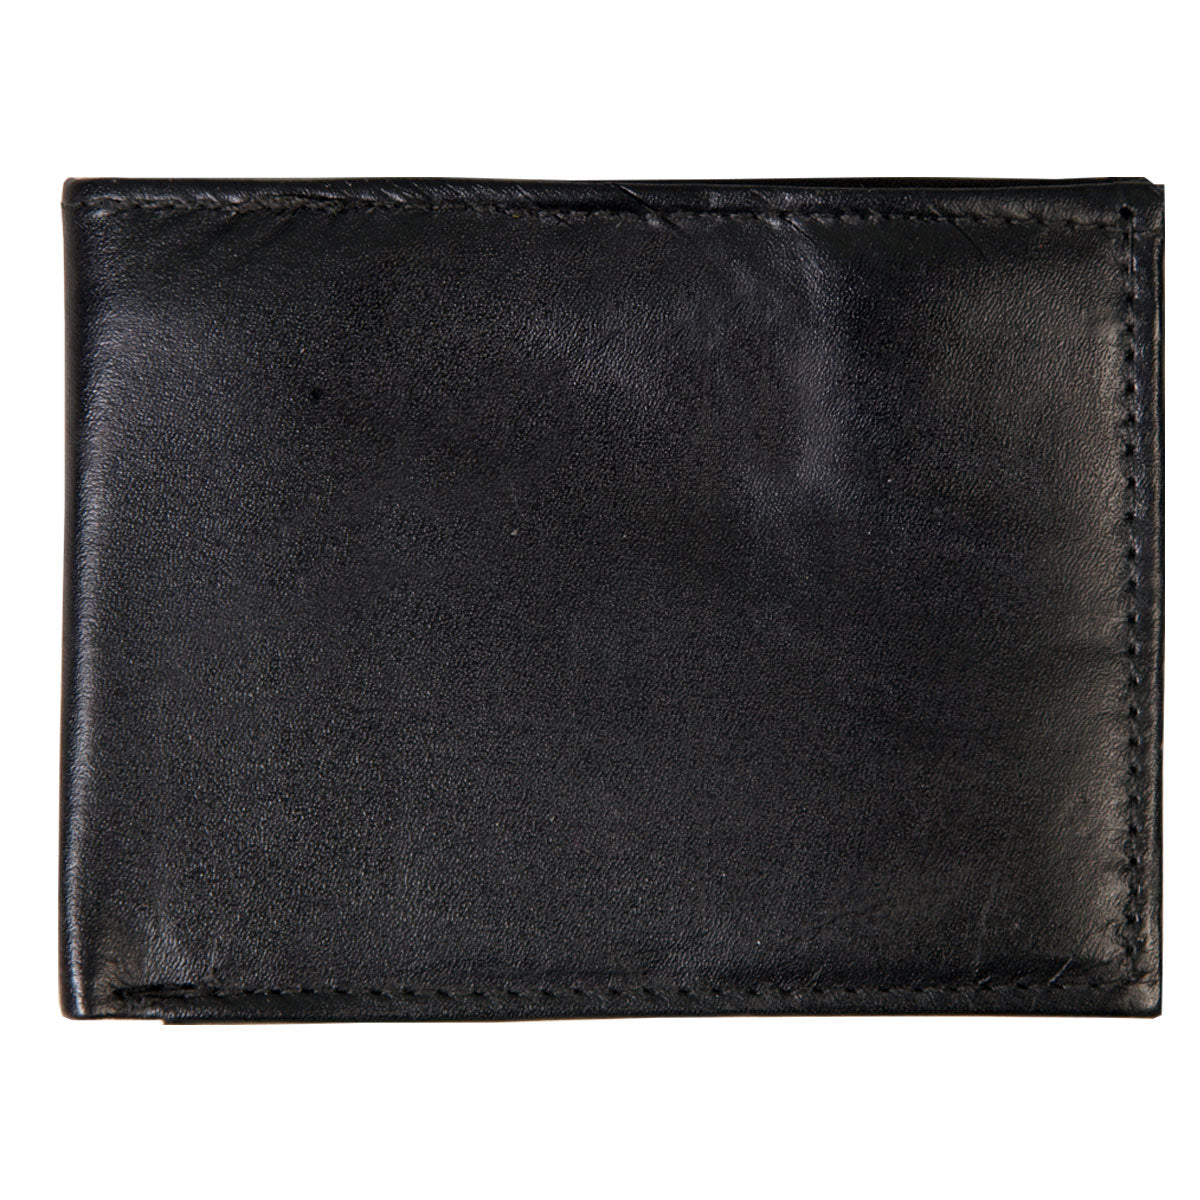 Hot Leathers WLD1005 Black Leather Bi-Fold Wallet